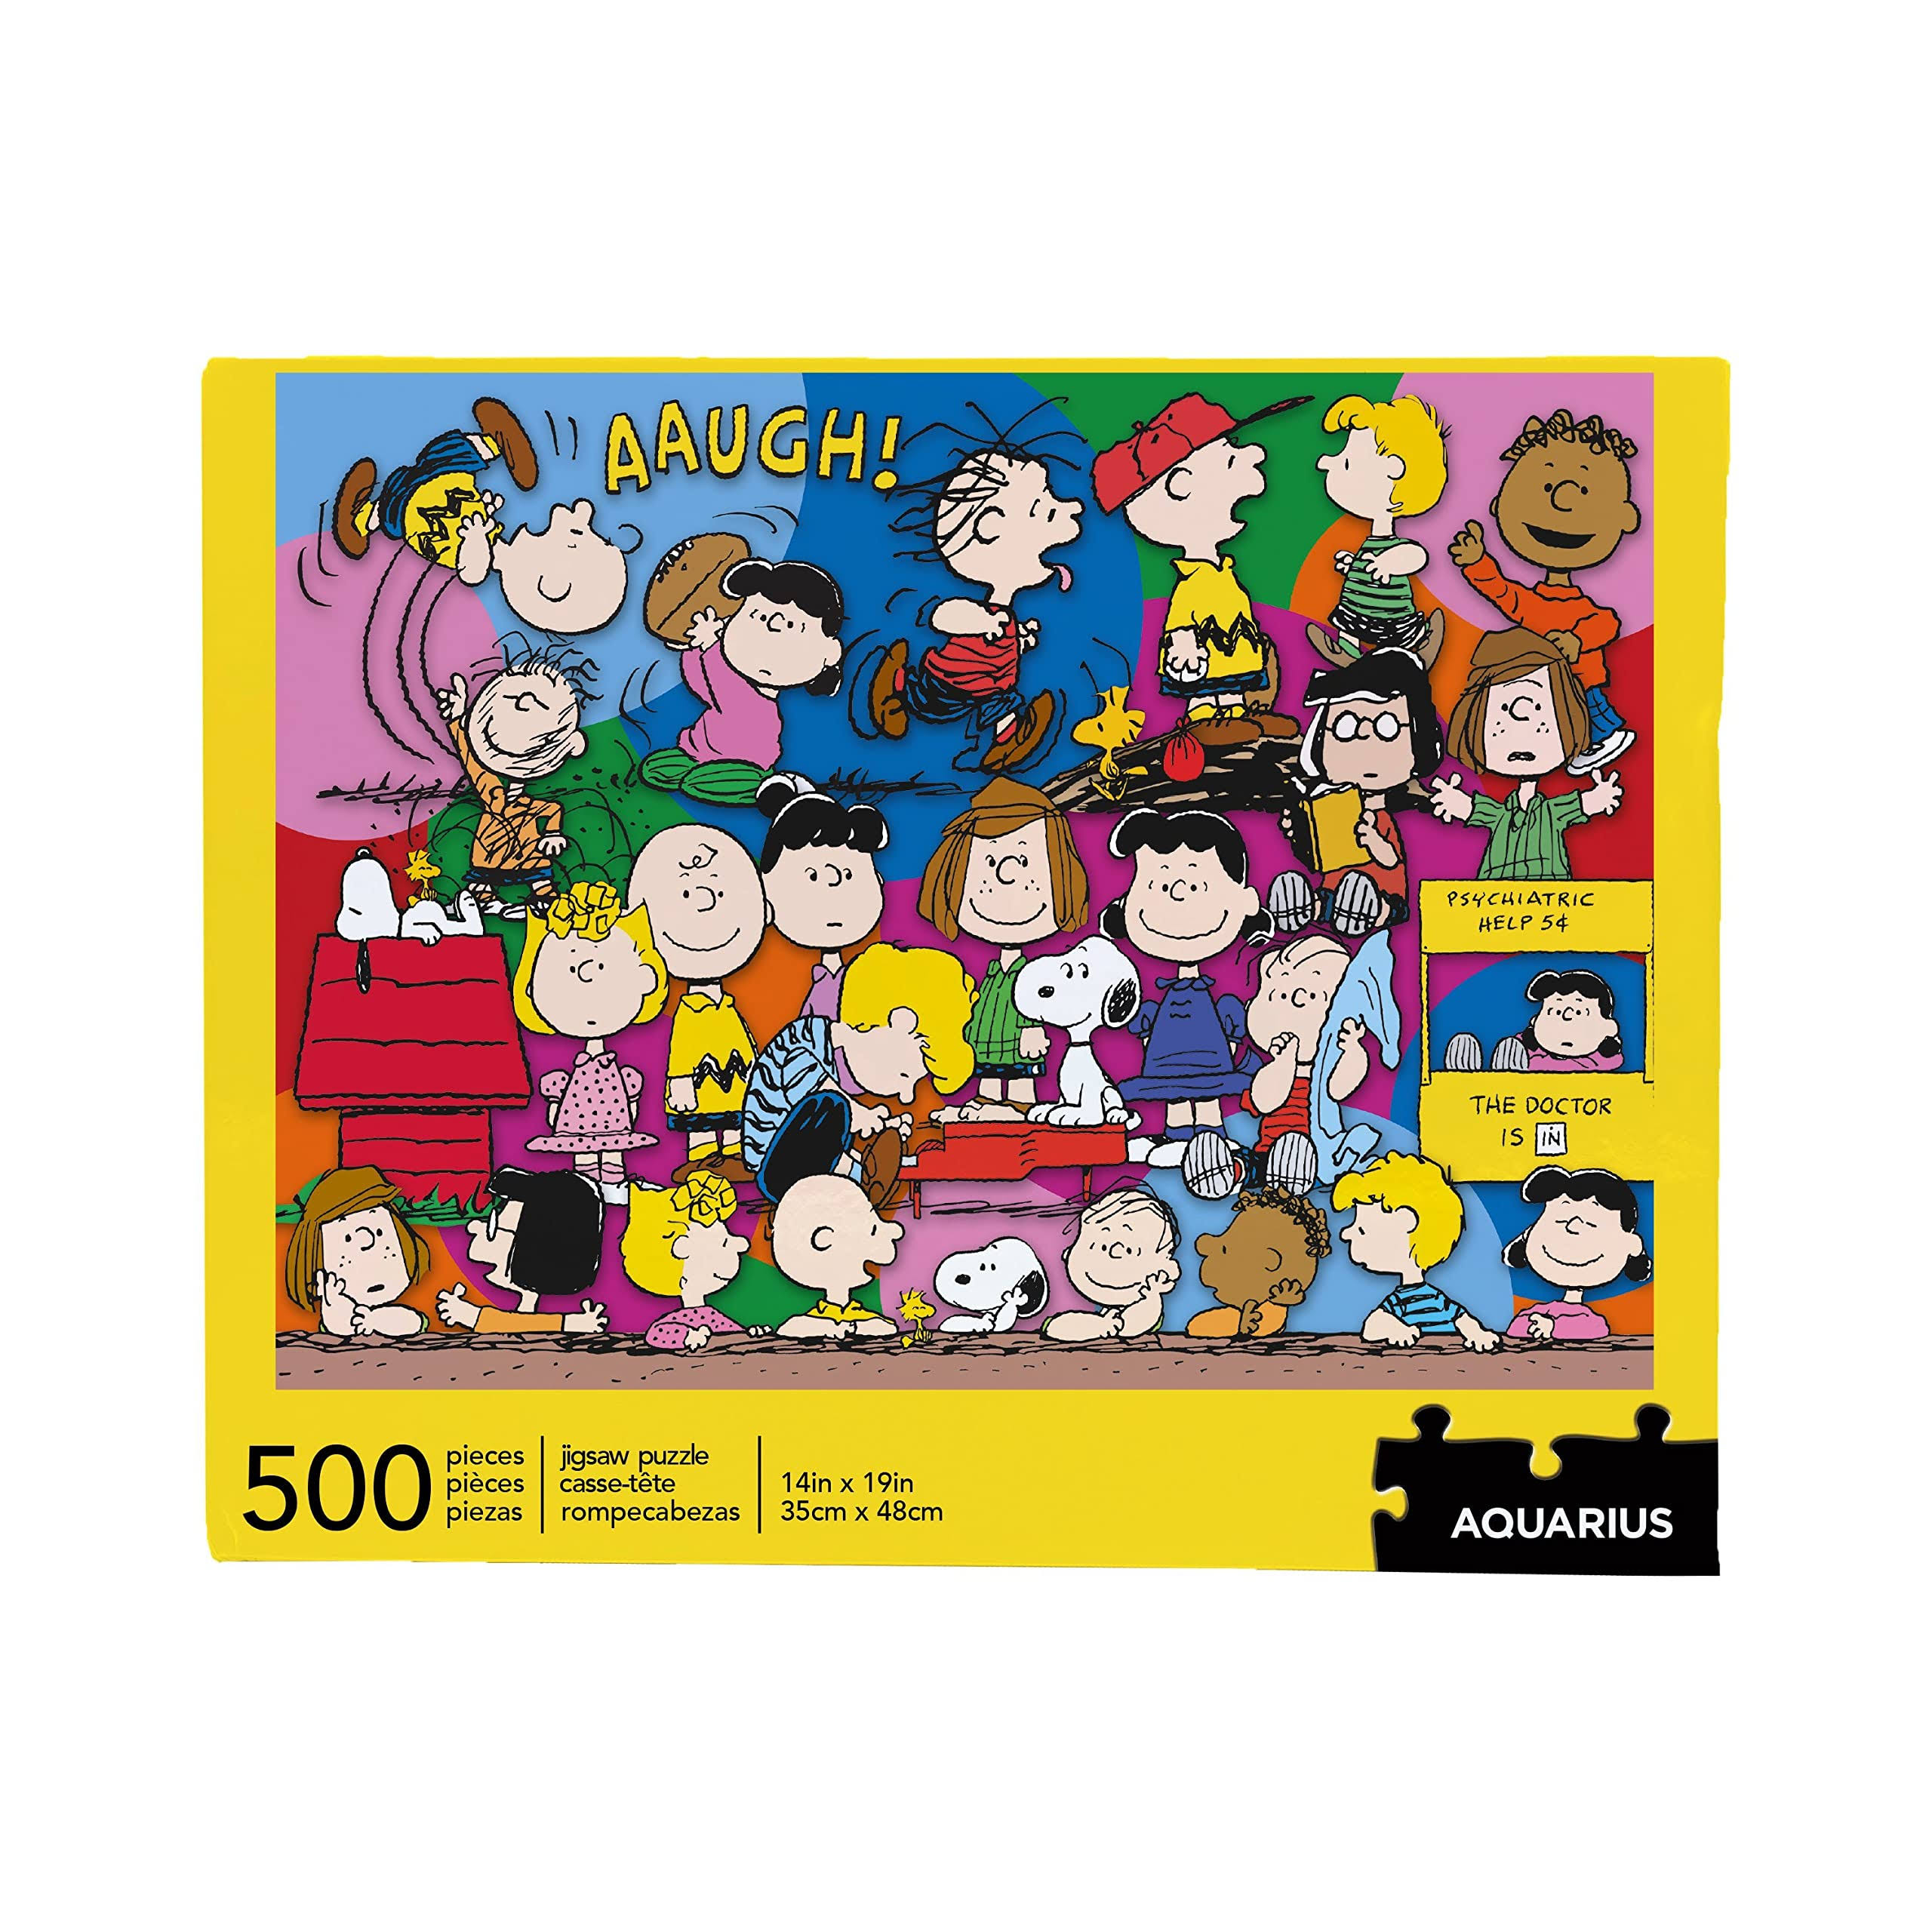 Peanuts Cast 500 Piece Jigsaw Puzzle